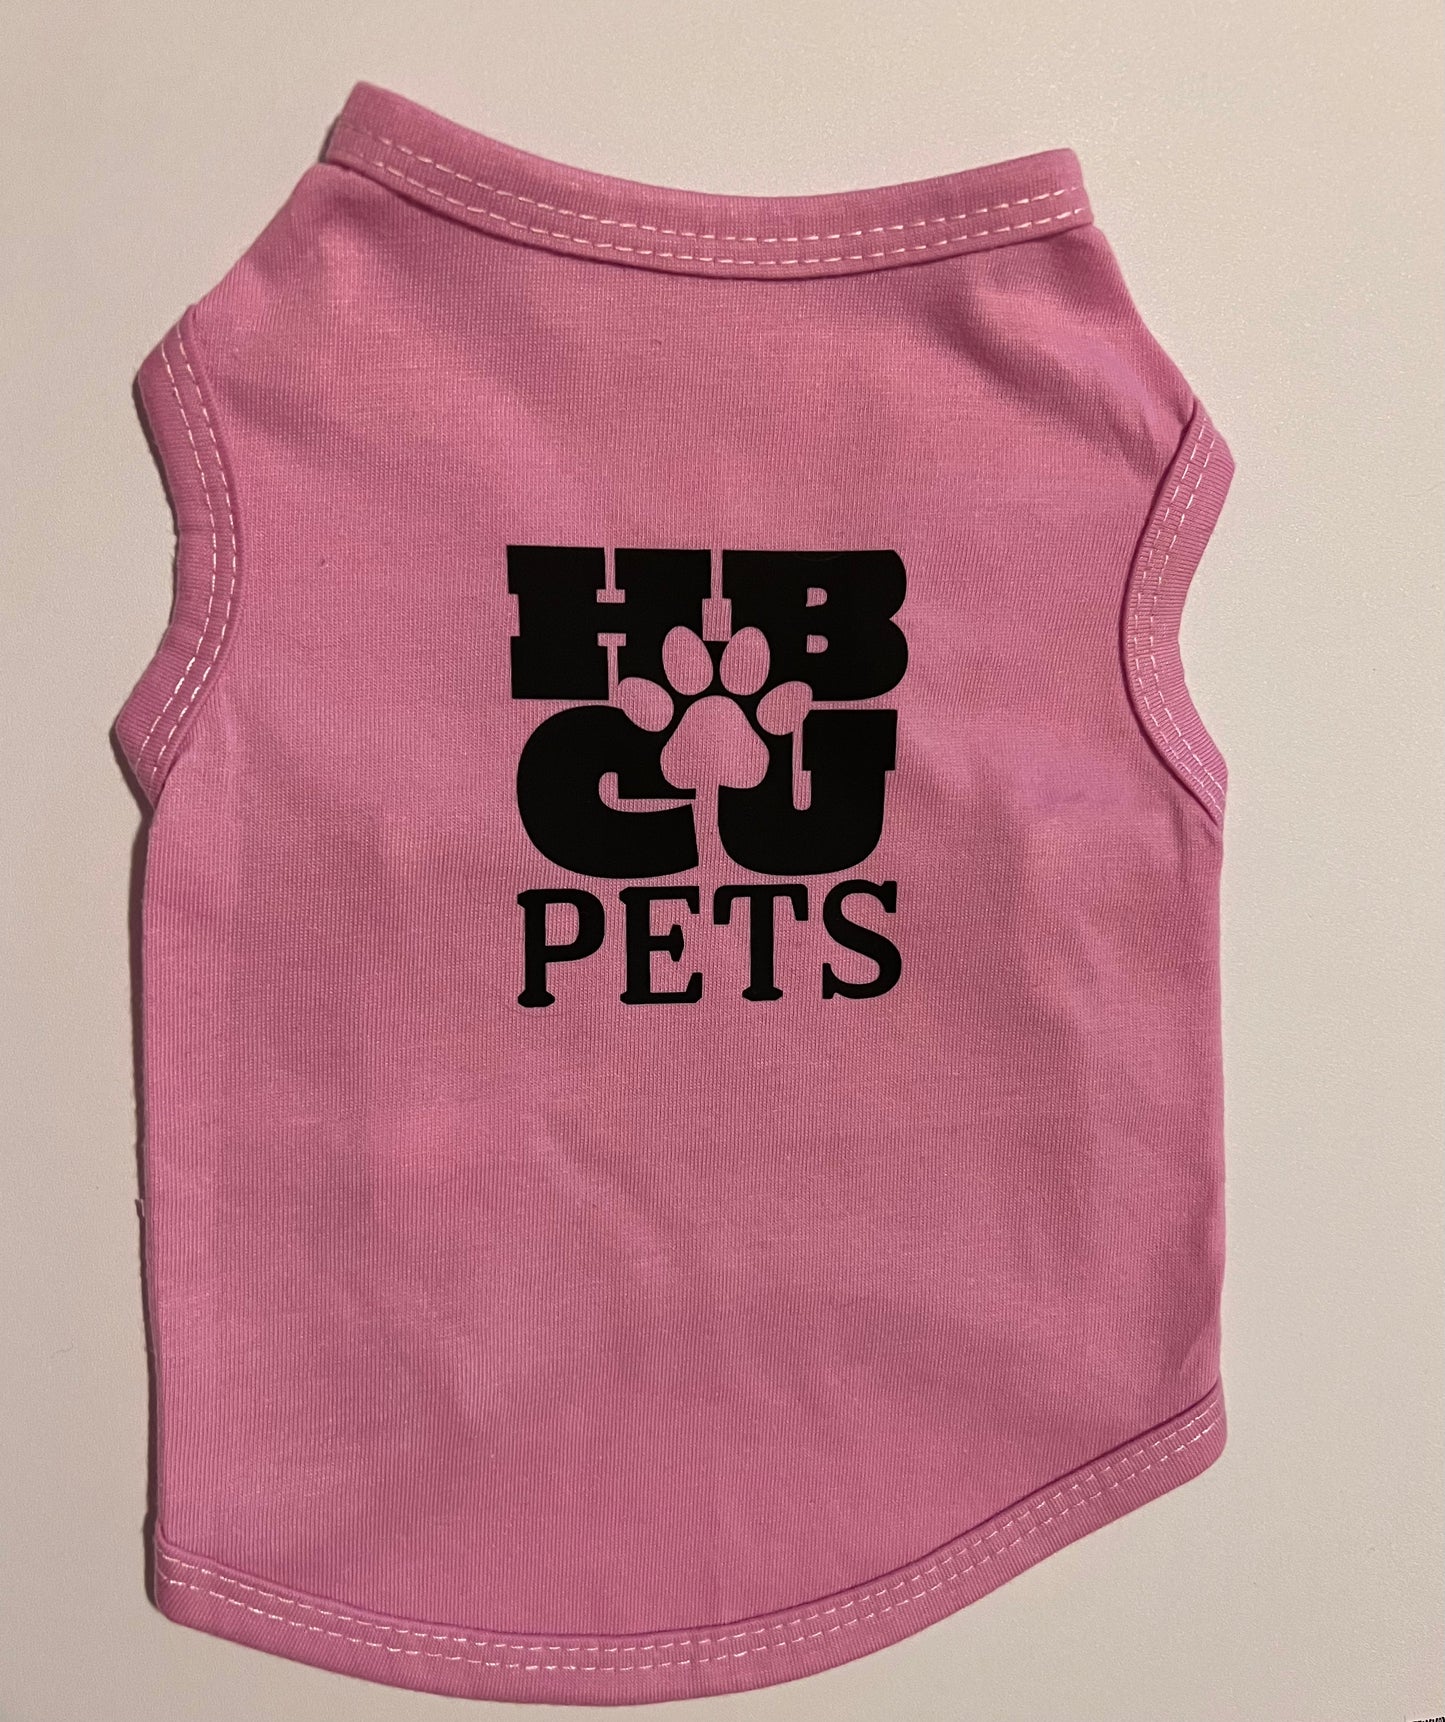 LIMITED EDITION: HBCU Pets Pink & Black Pet t-shirt- PINKTOBER